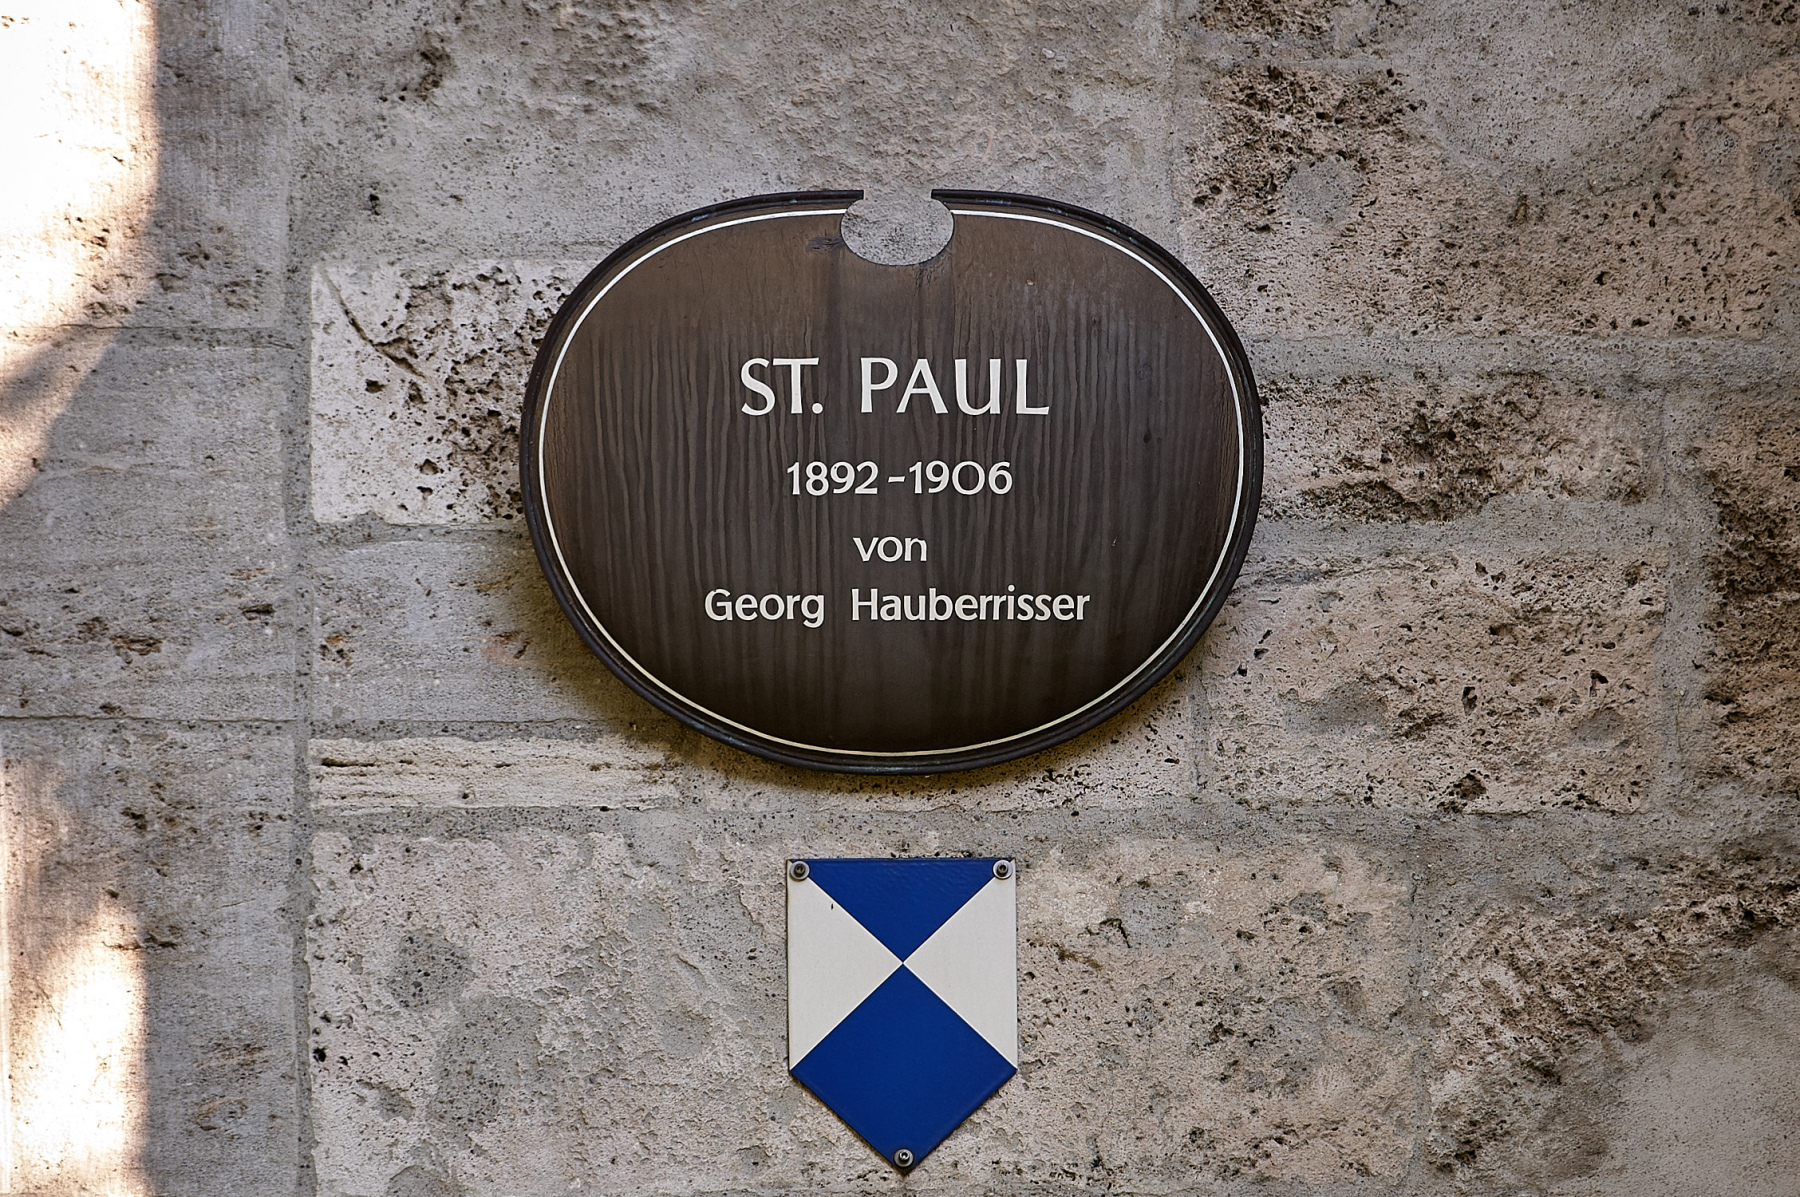 St. Paul Munich